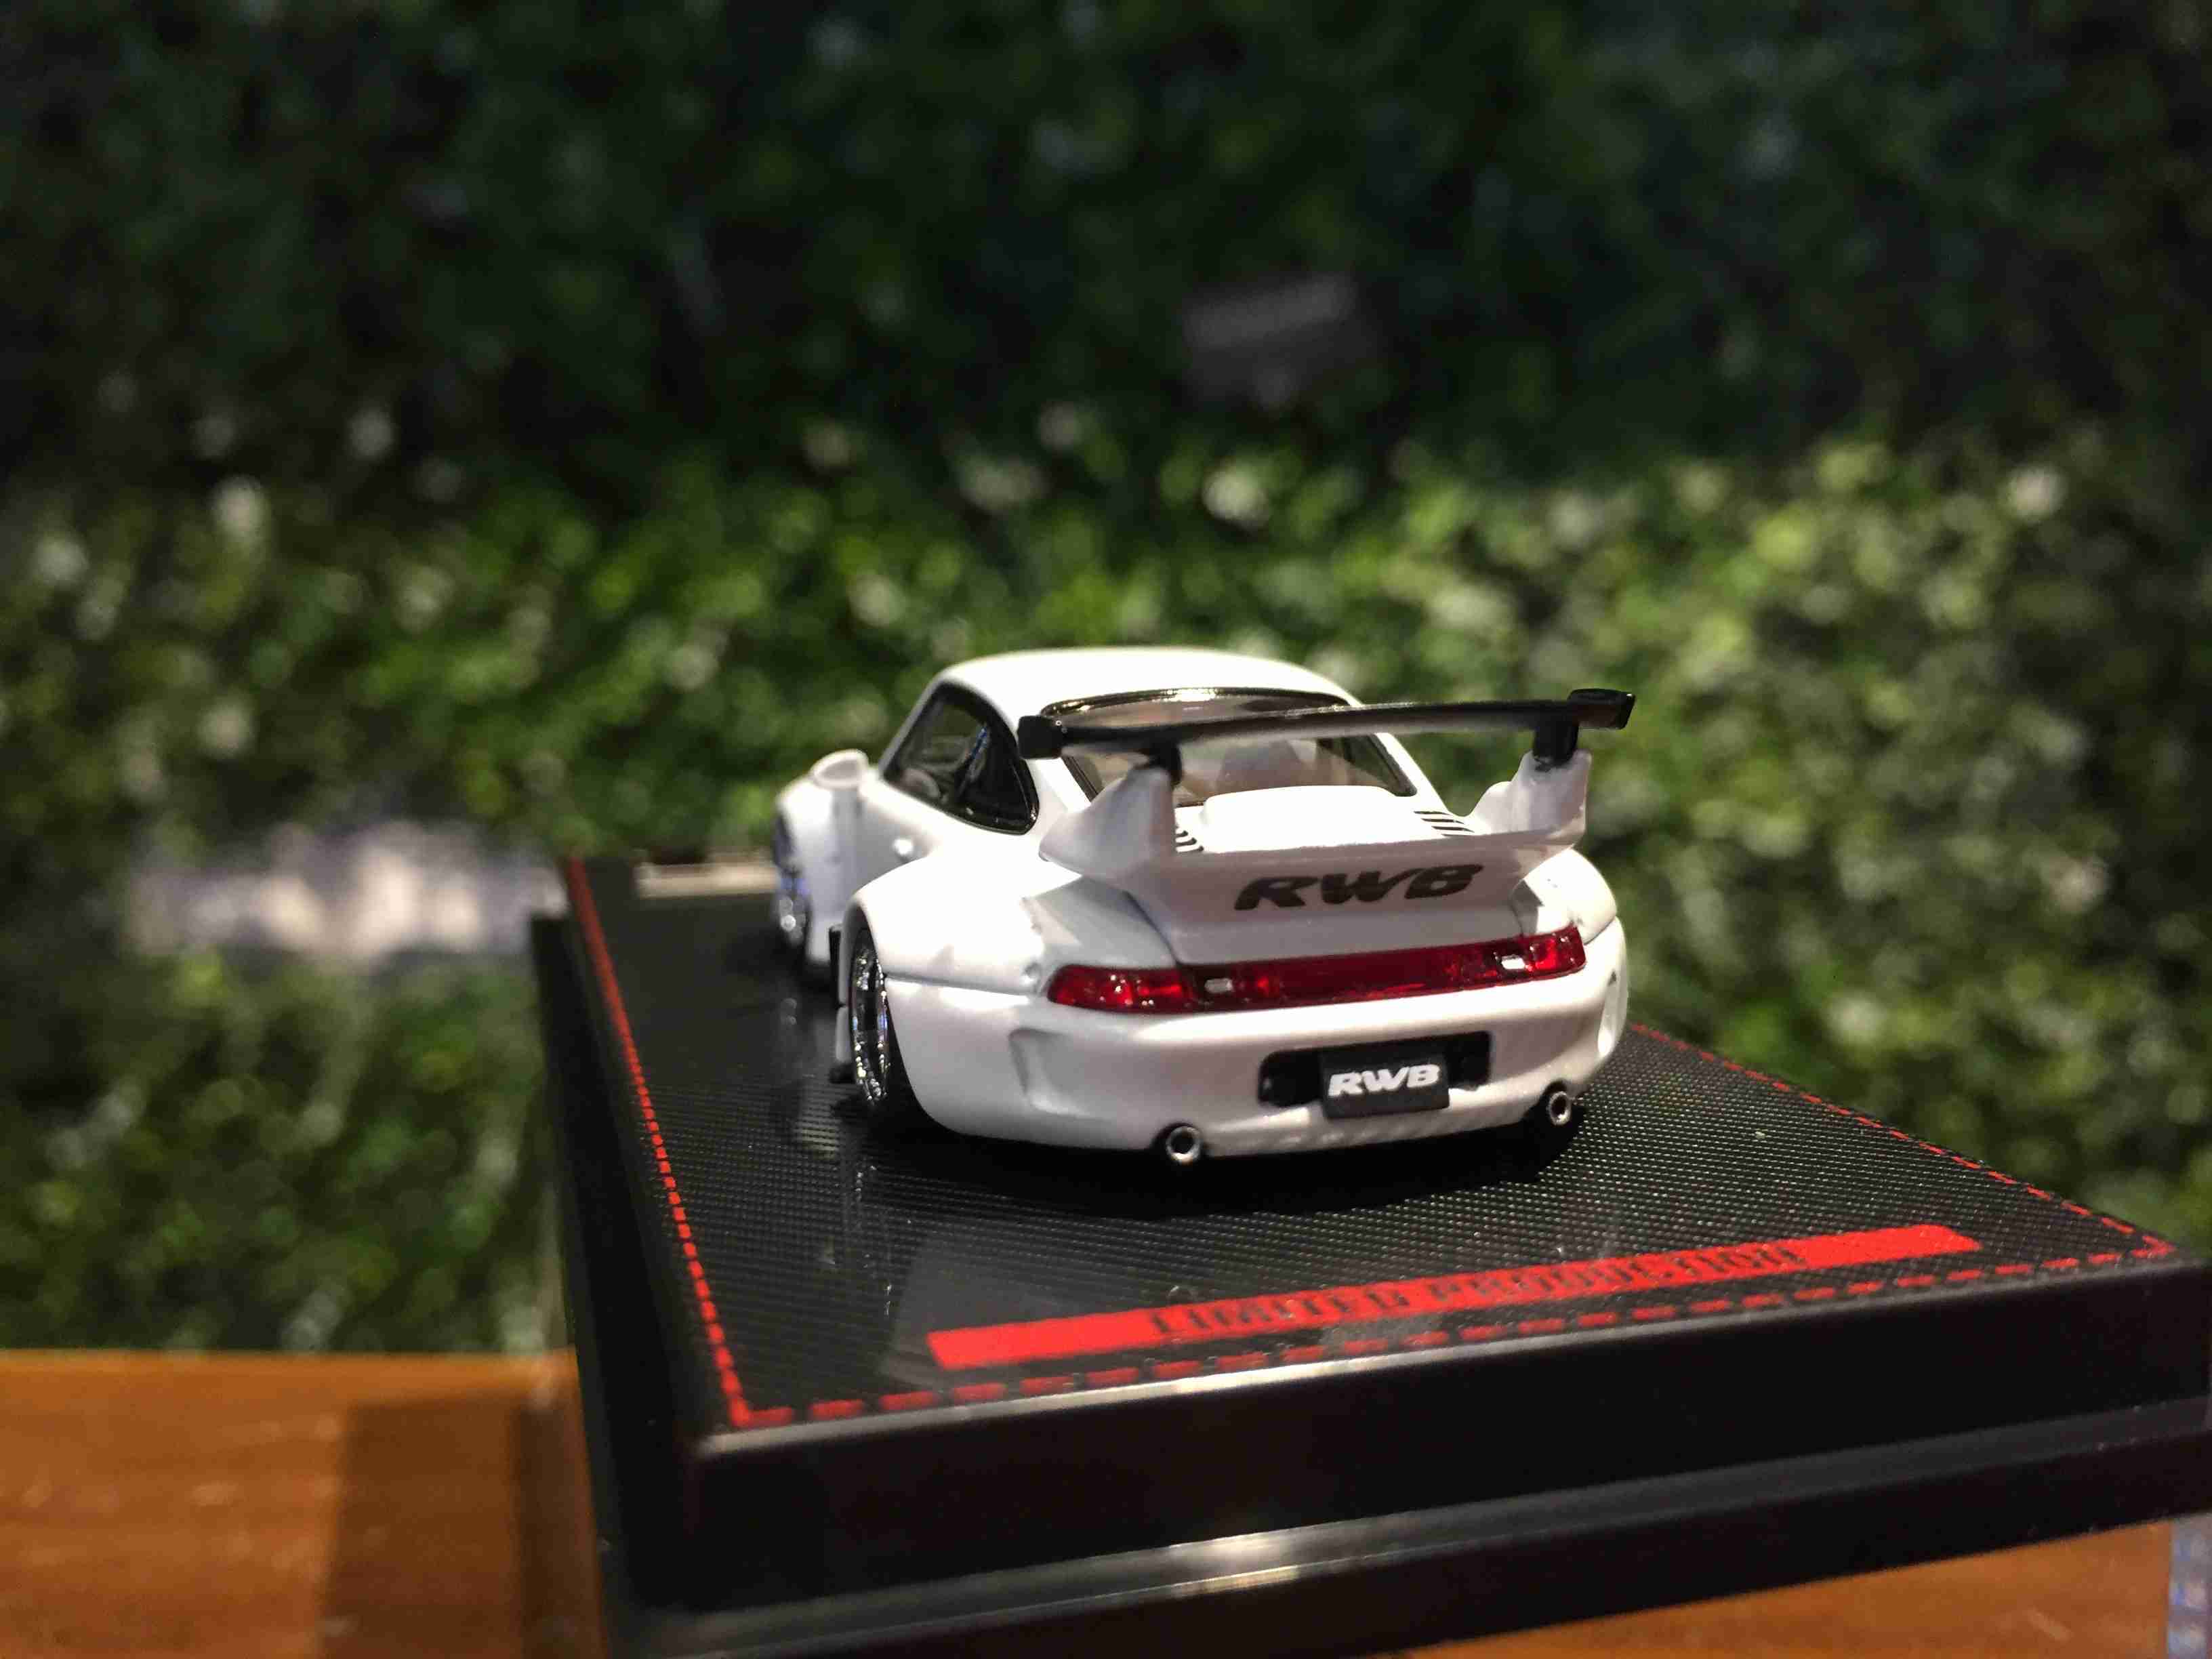 1/64 Ignition Model RWB Porsche 993 White IG2152【MGM】